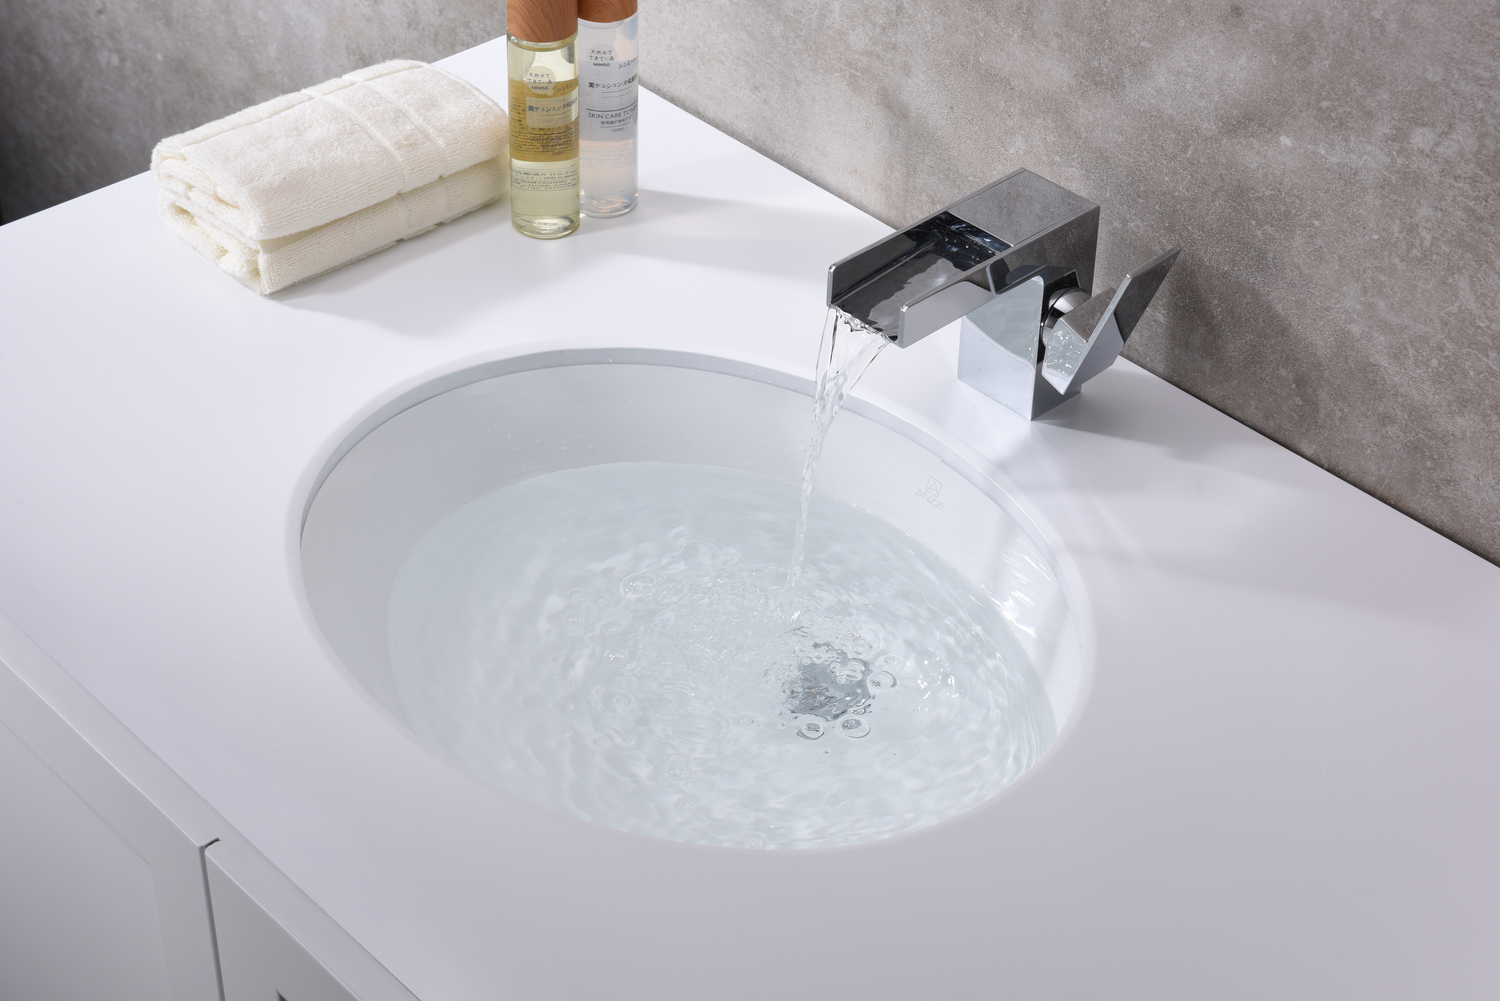 deco bathroom Anzzi BATHROOM - Sinks - Under Mount - Ceramic / Procelain White